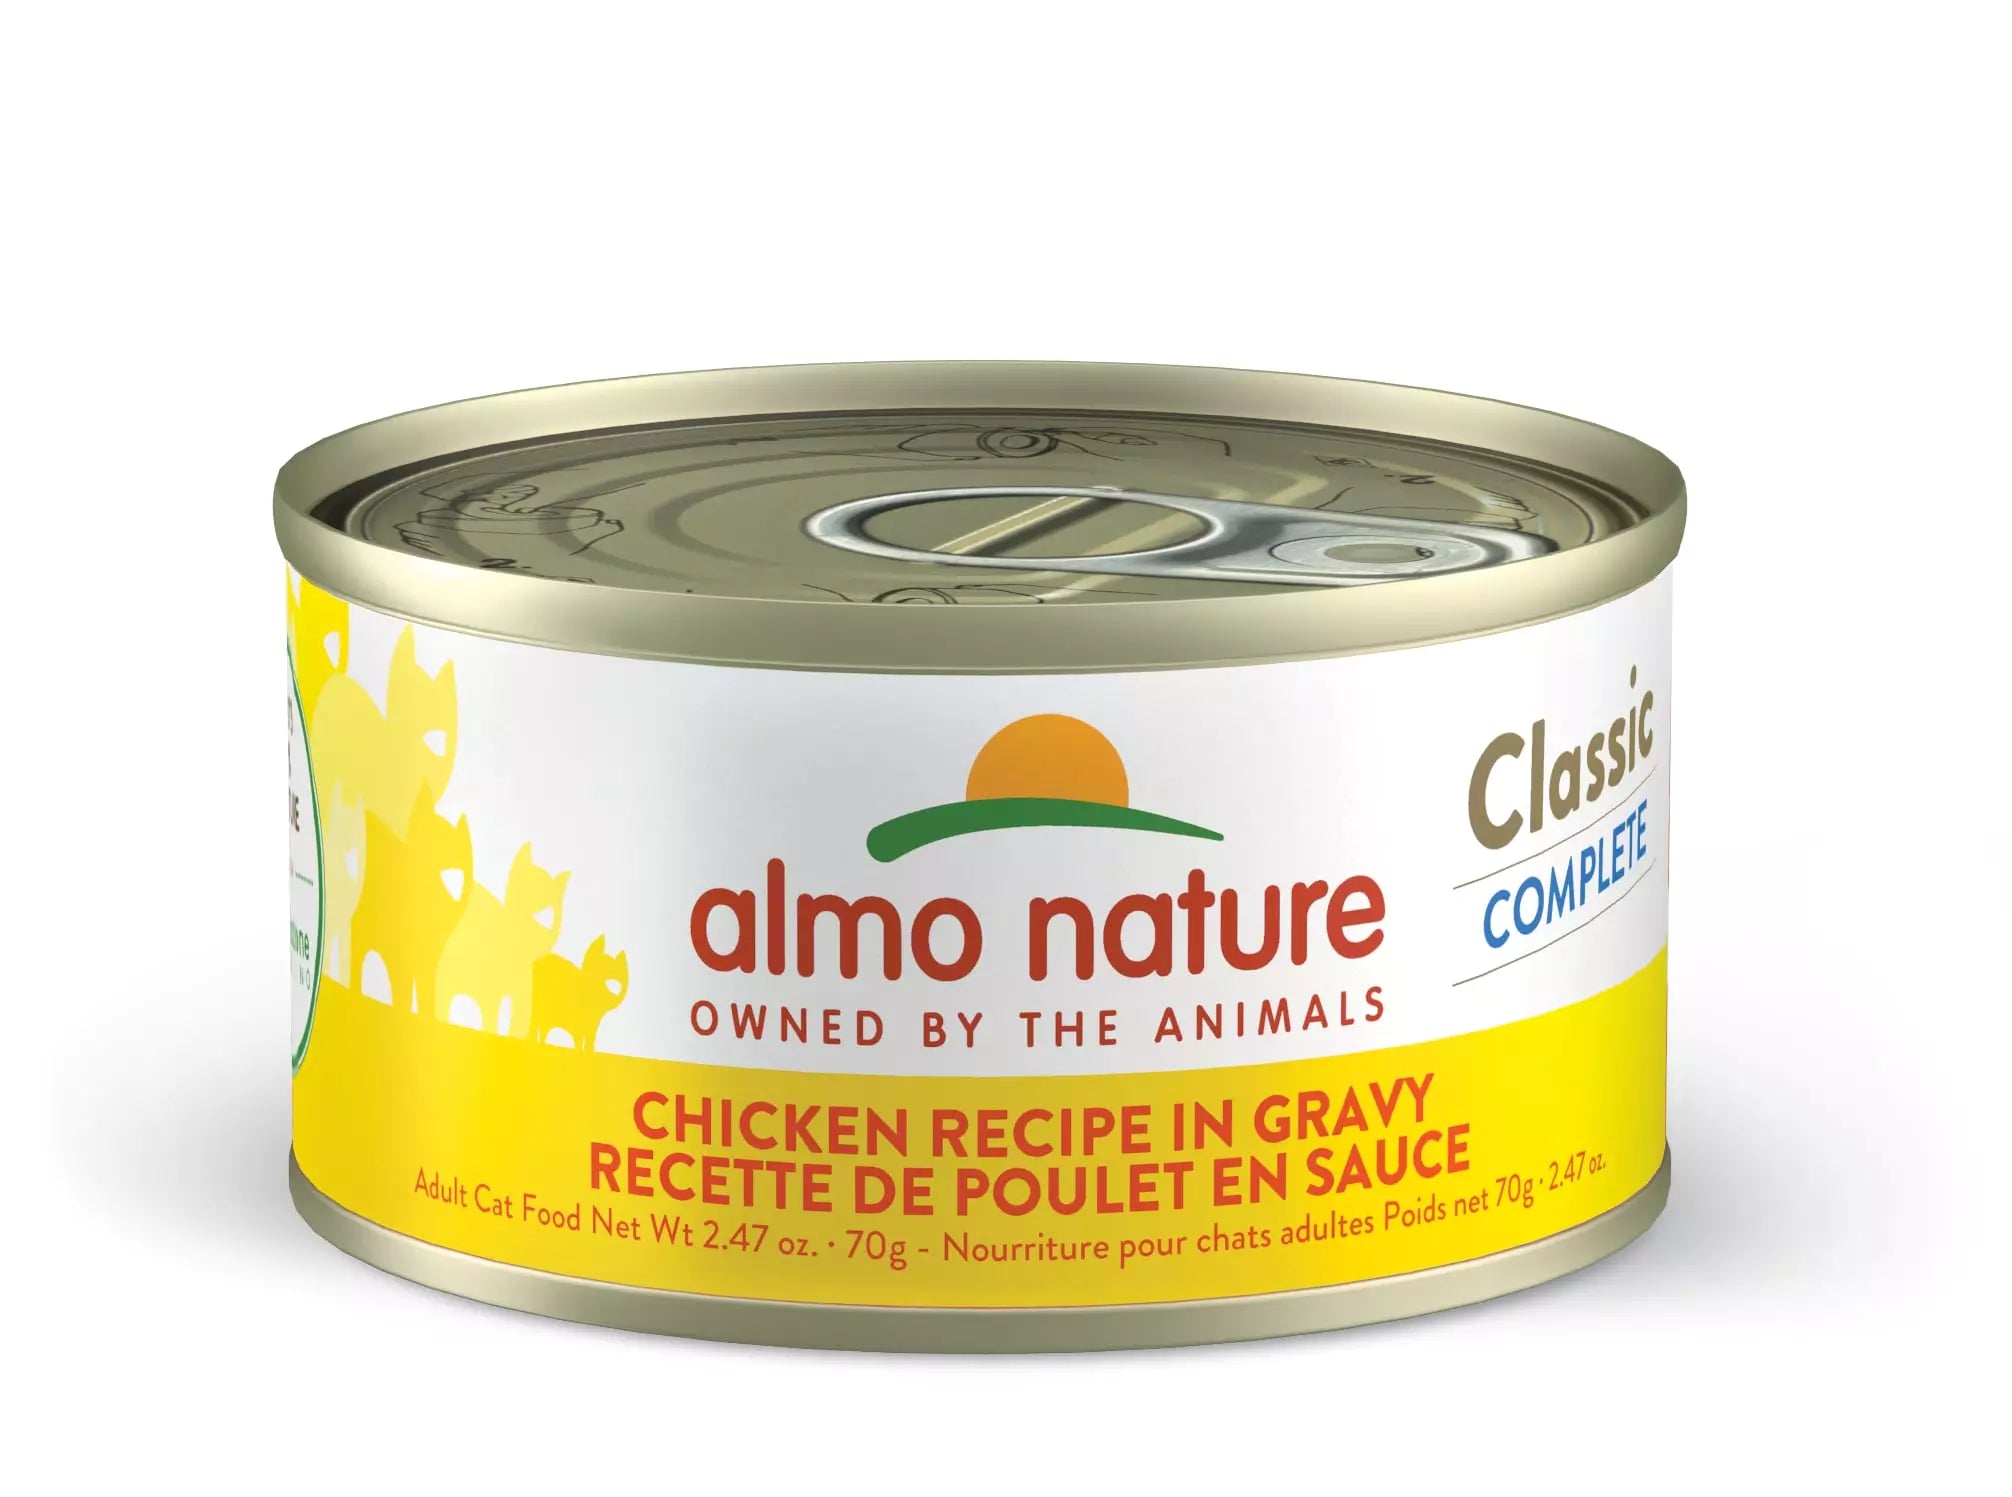 Almo Nature - Classic Complete - Chicken Recipe in Gravy (Wet Cat Food)